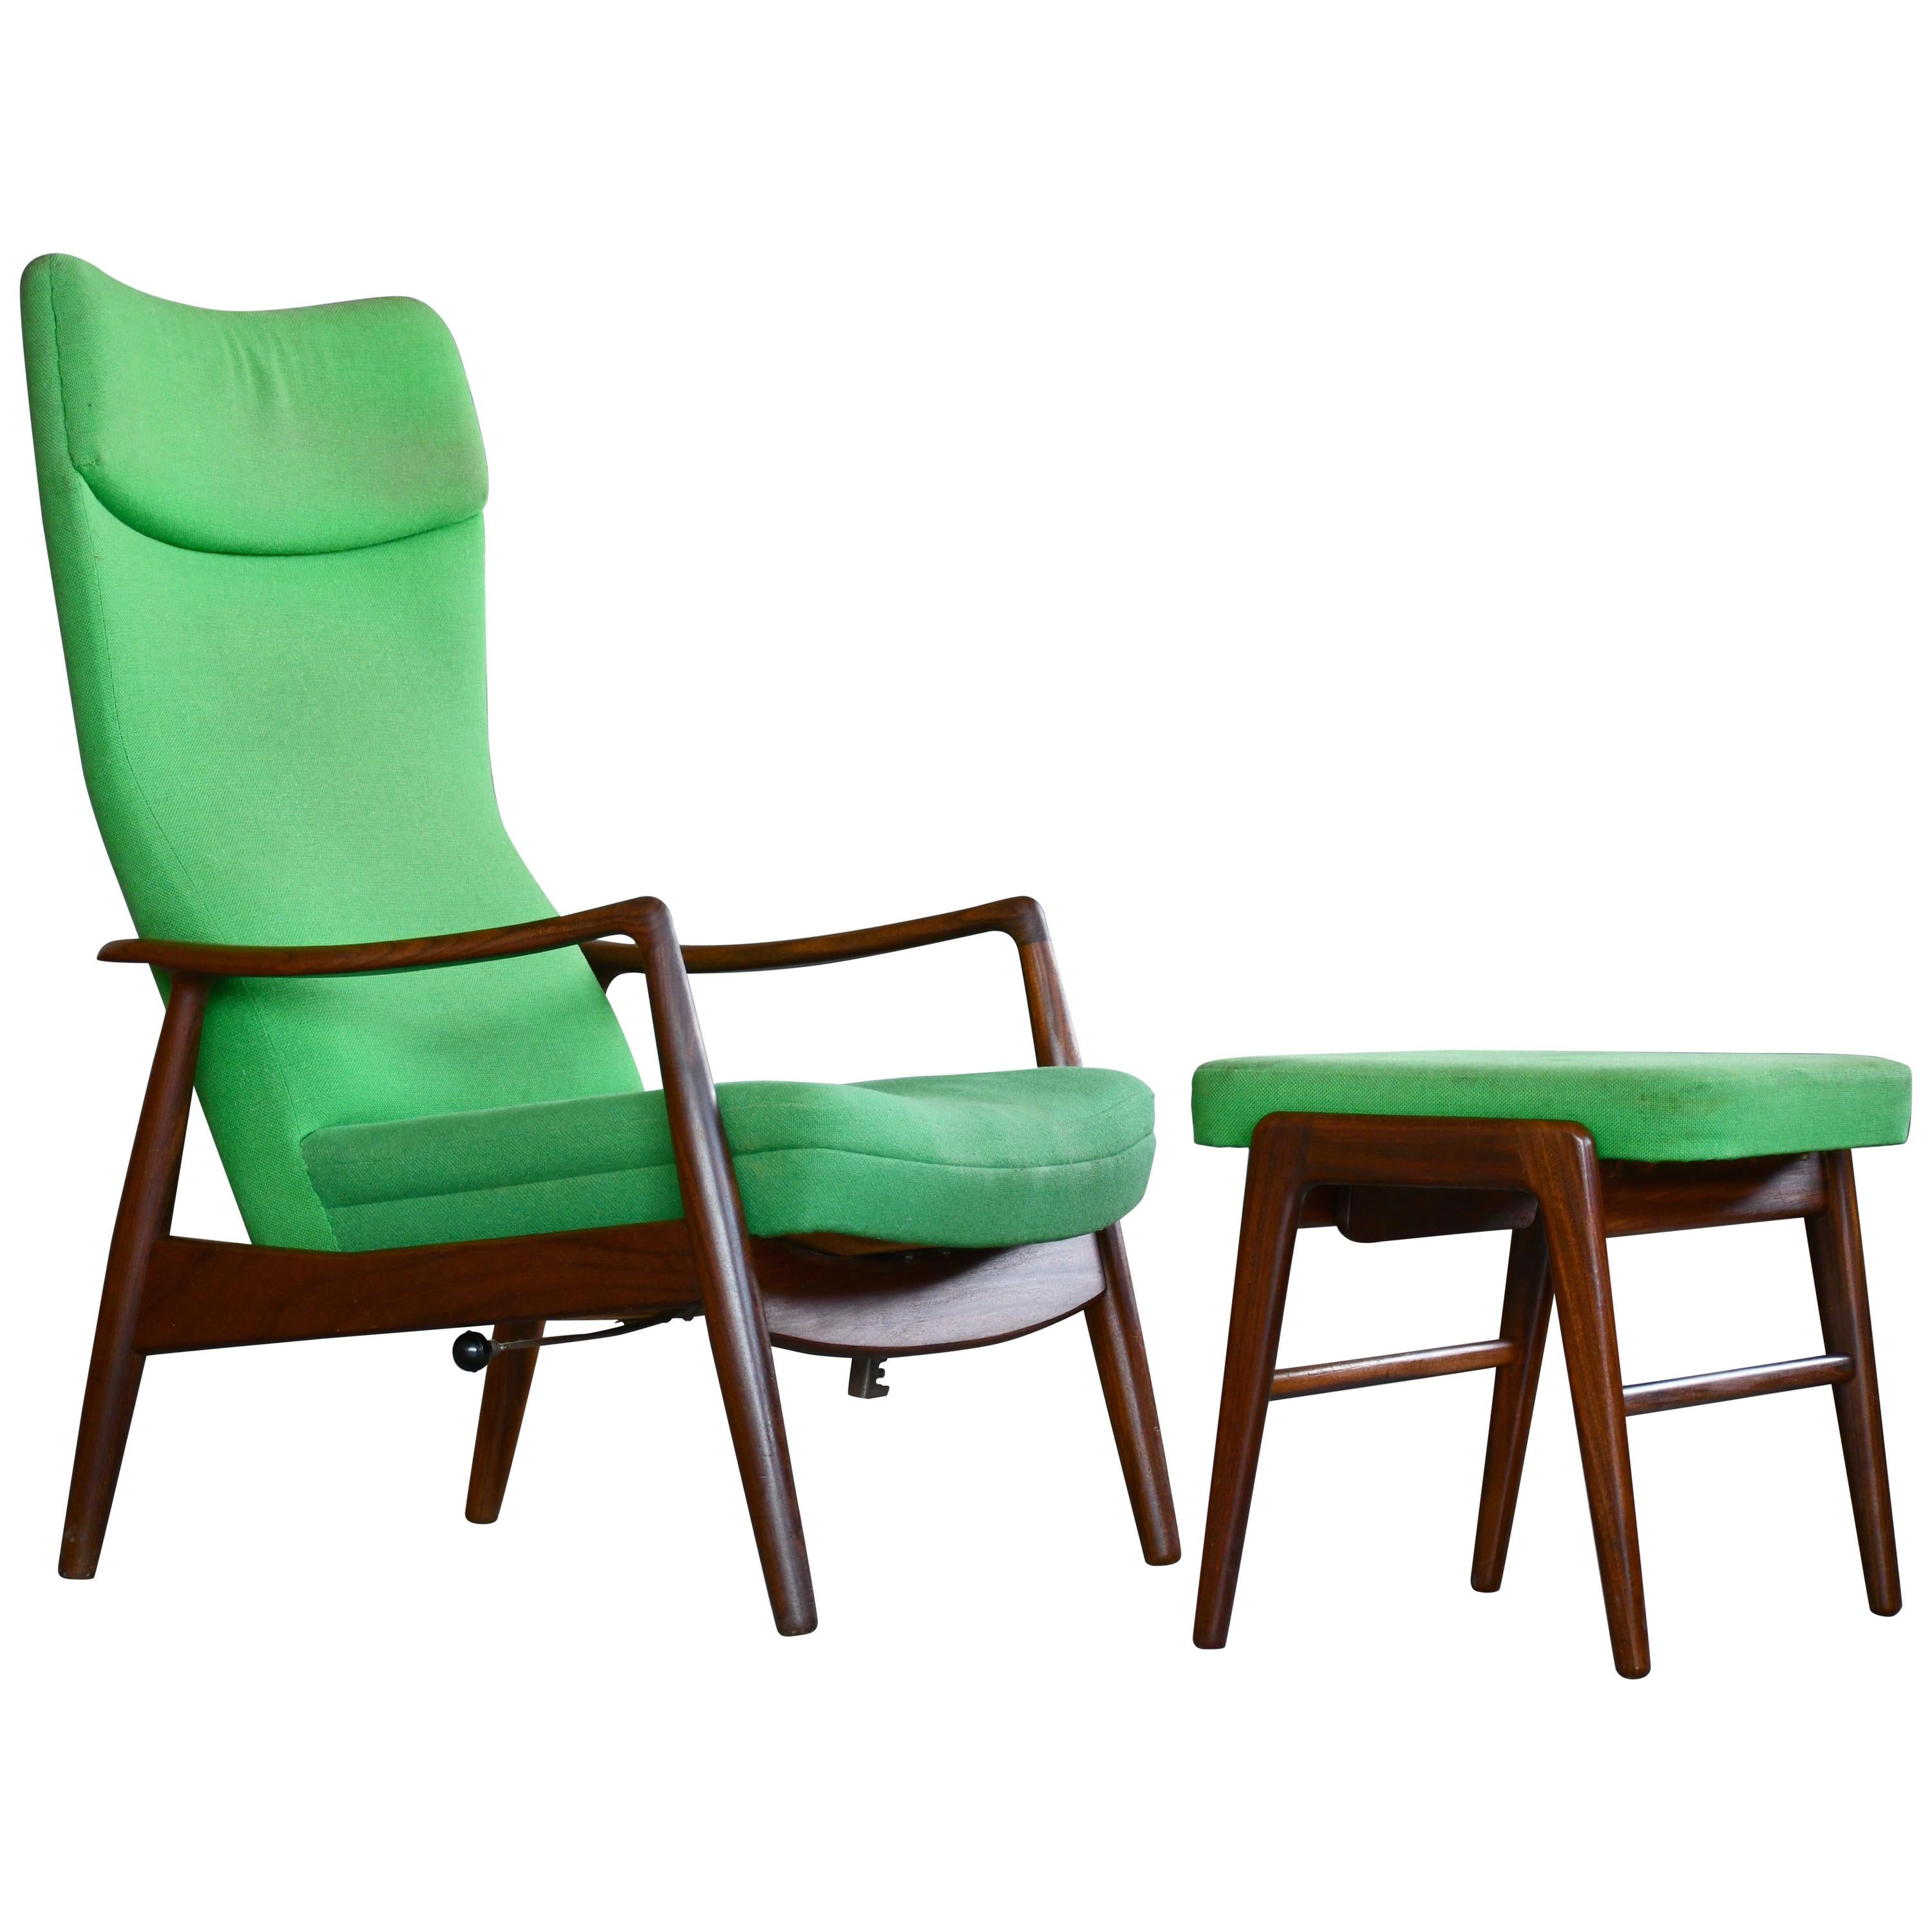 Madsen & Schubell Reclining Teak Lounge Chair with Ottoman, Denmark, circa 1960